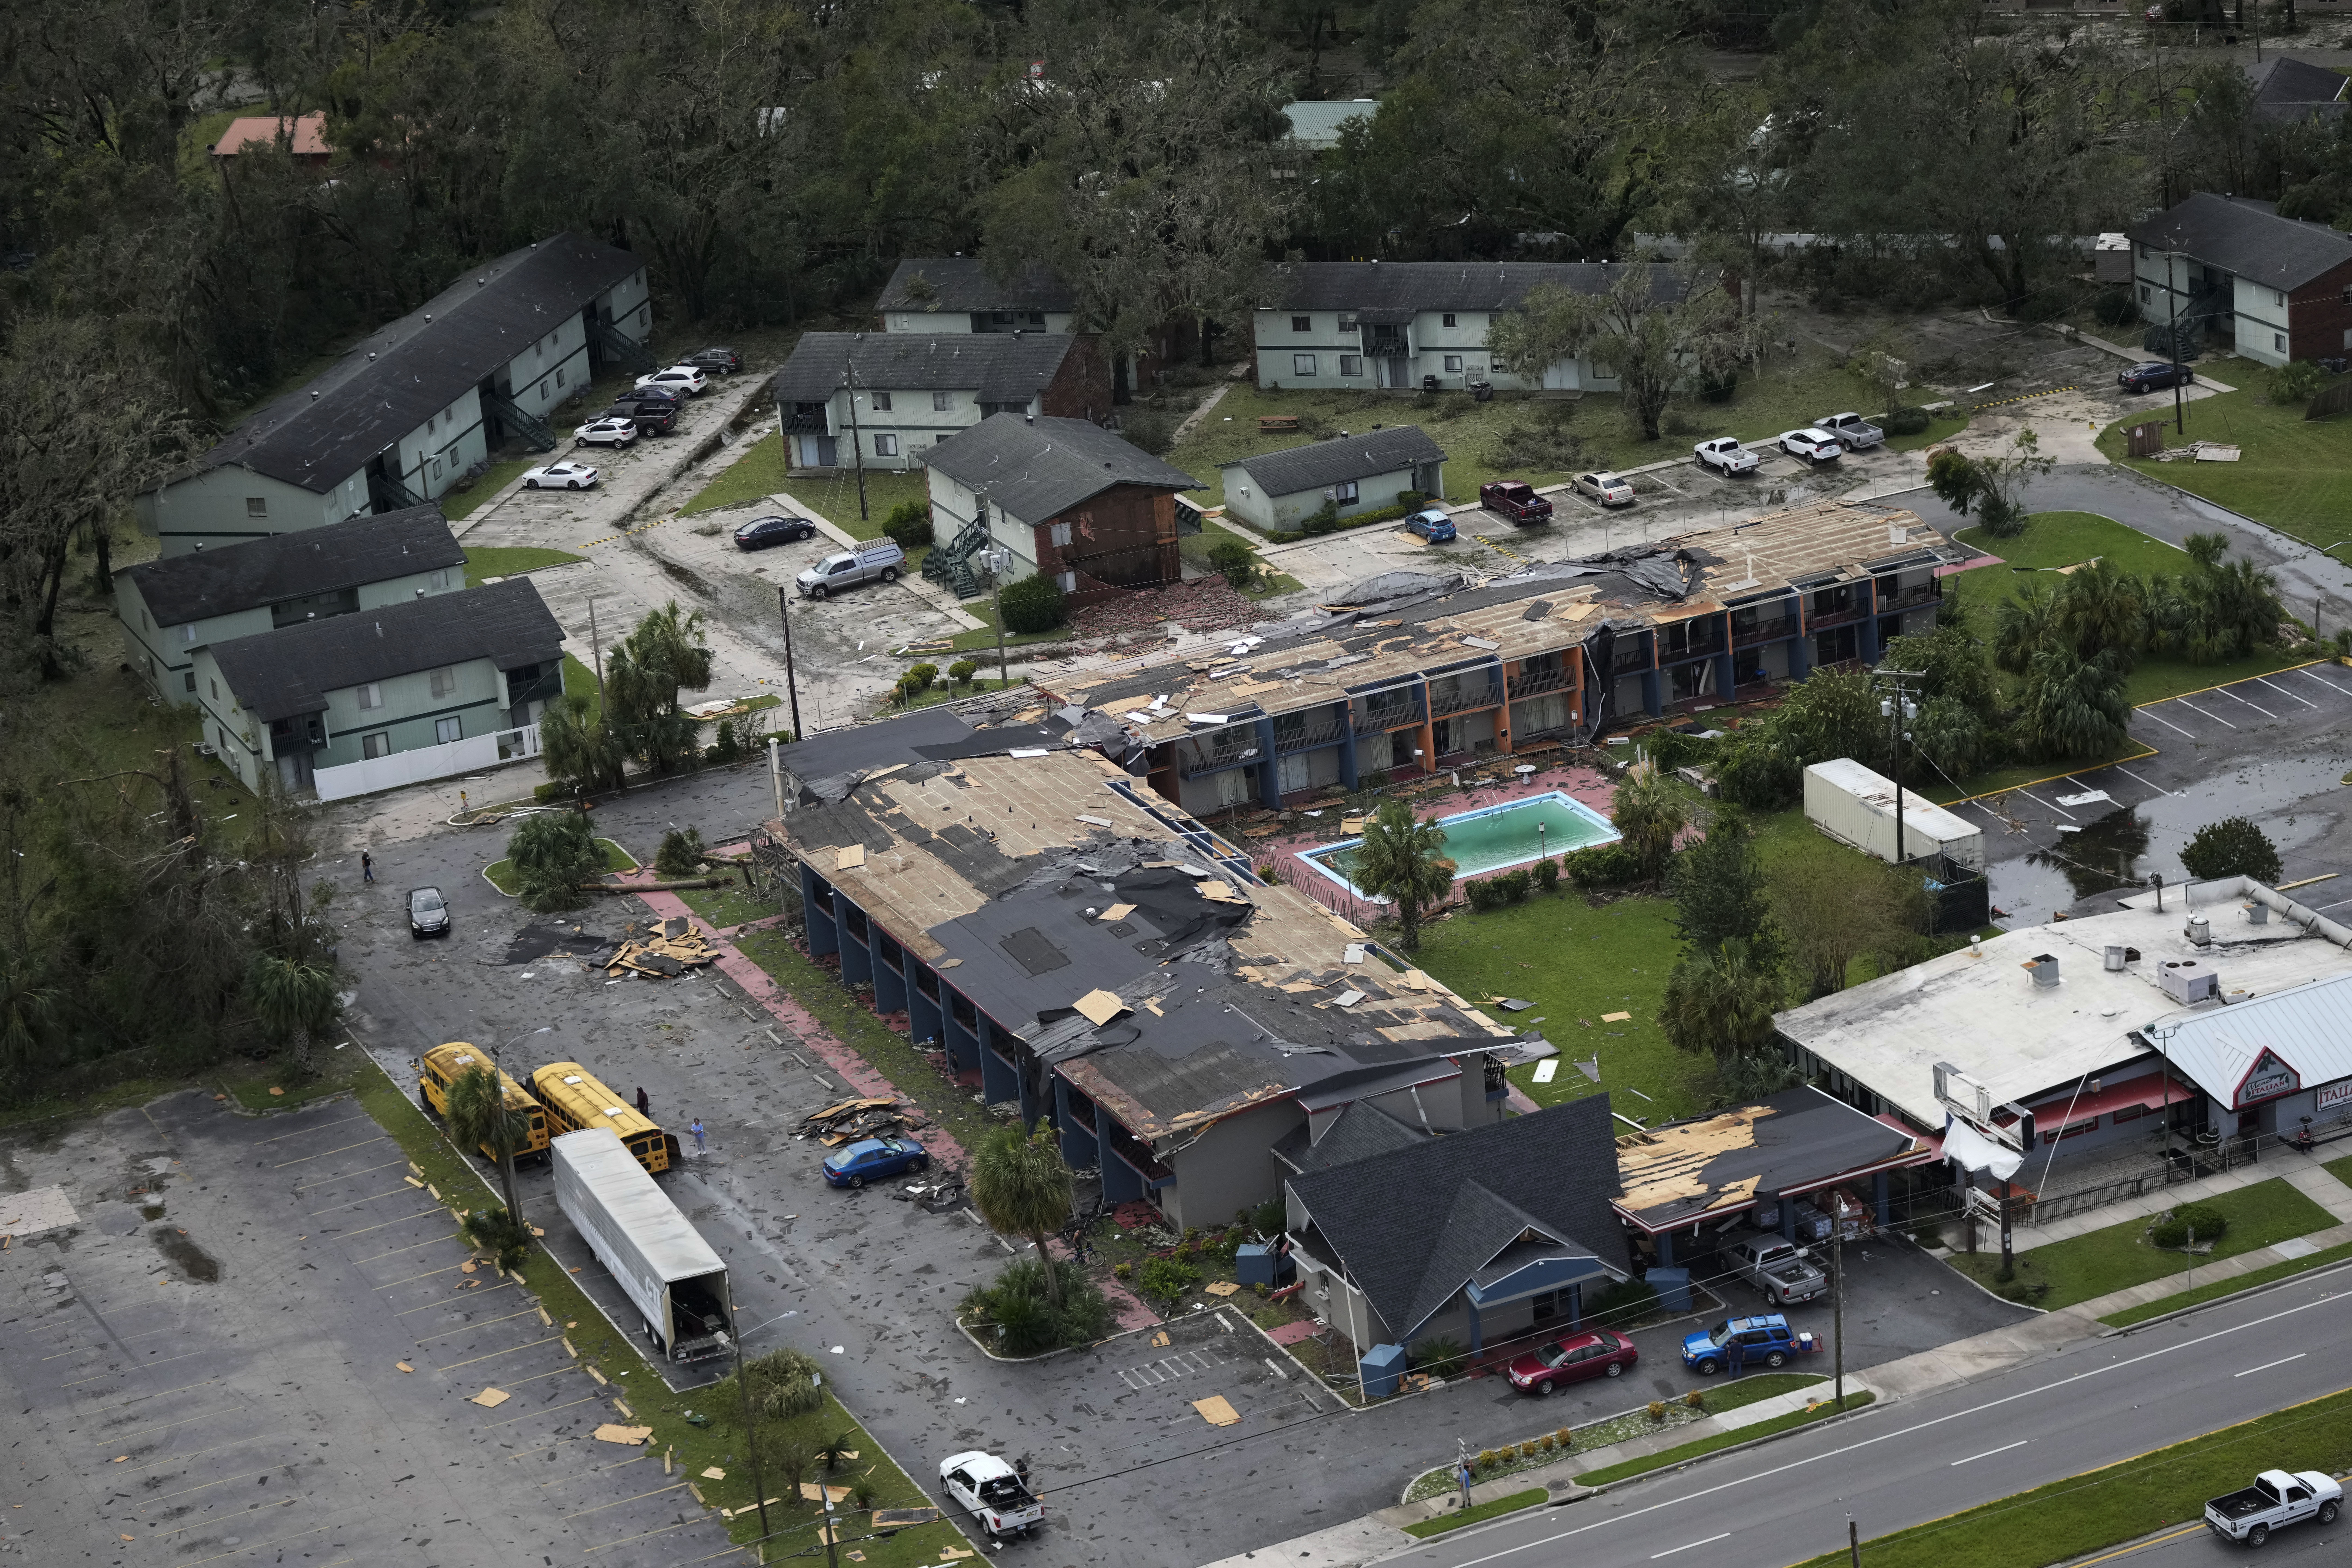 Biden surveys hurricane damage in Florida 